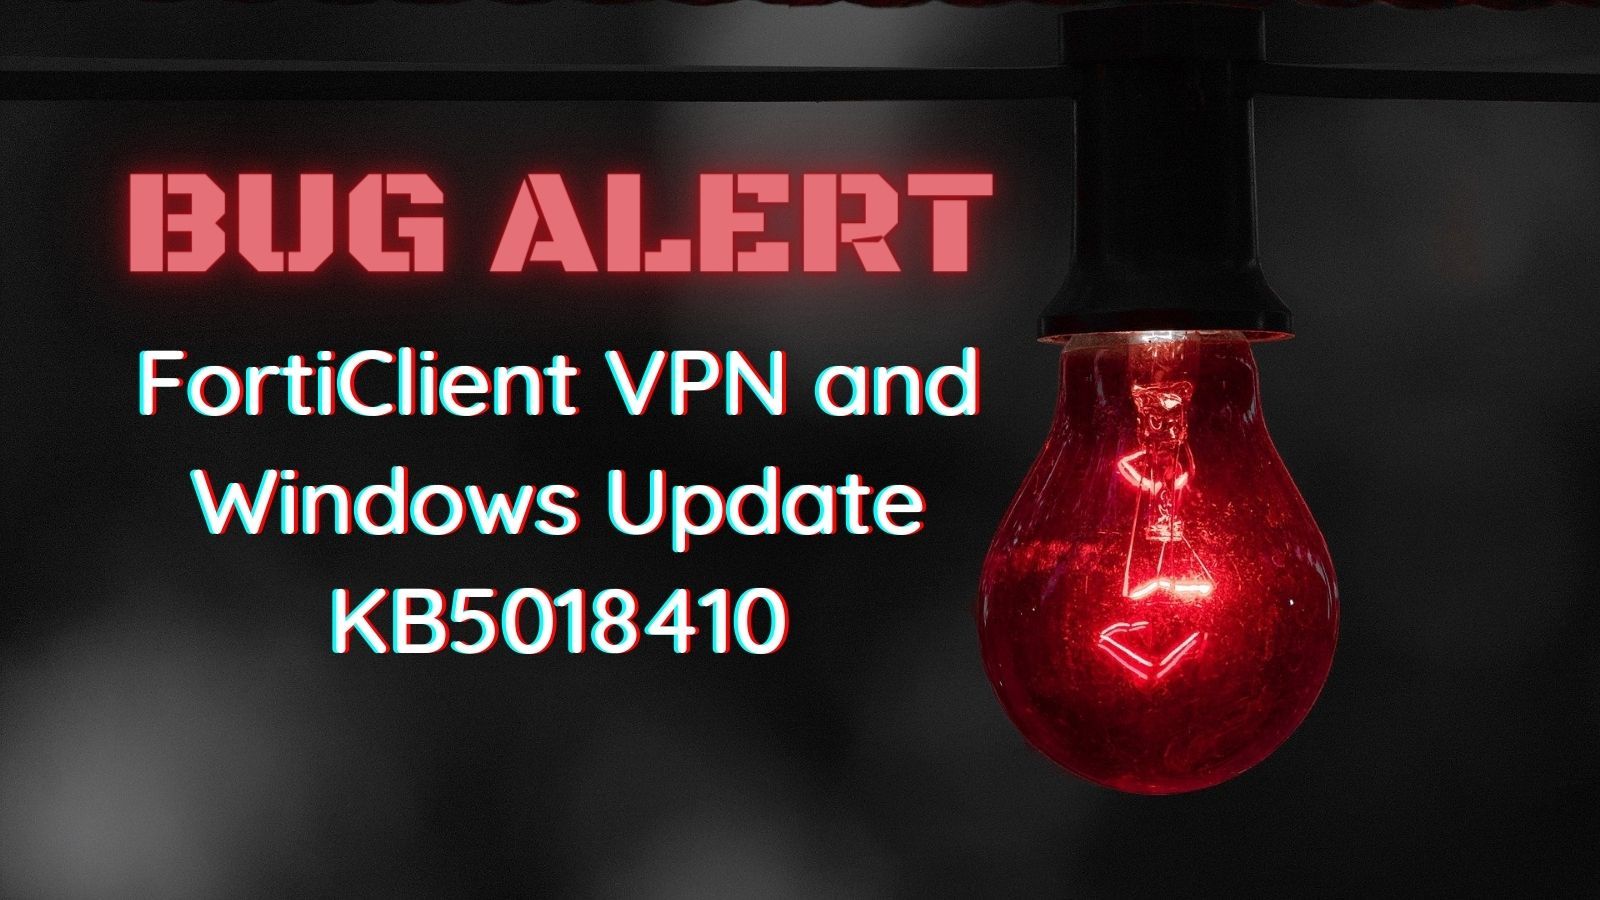 BUG ALERT: FortiClient VPN and Windows Update KB5018410